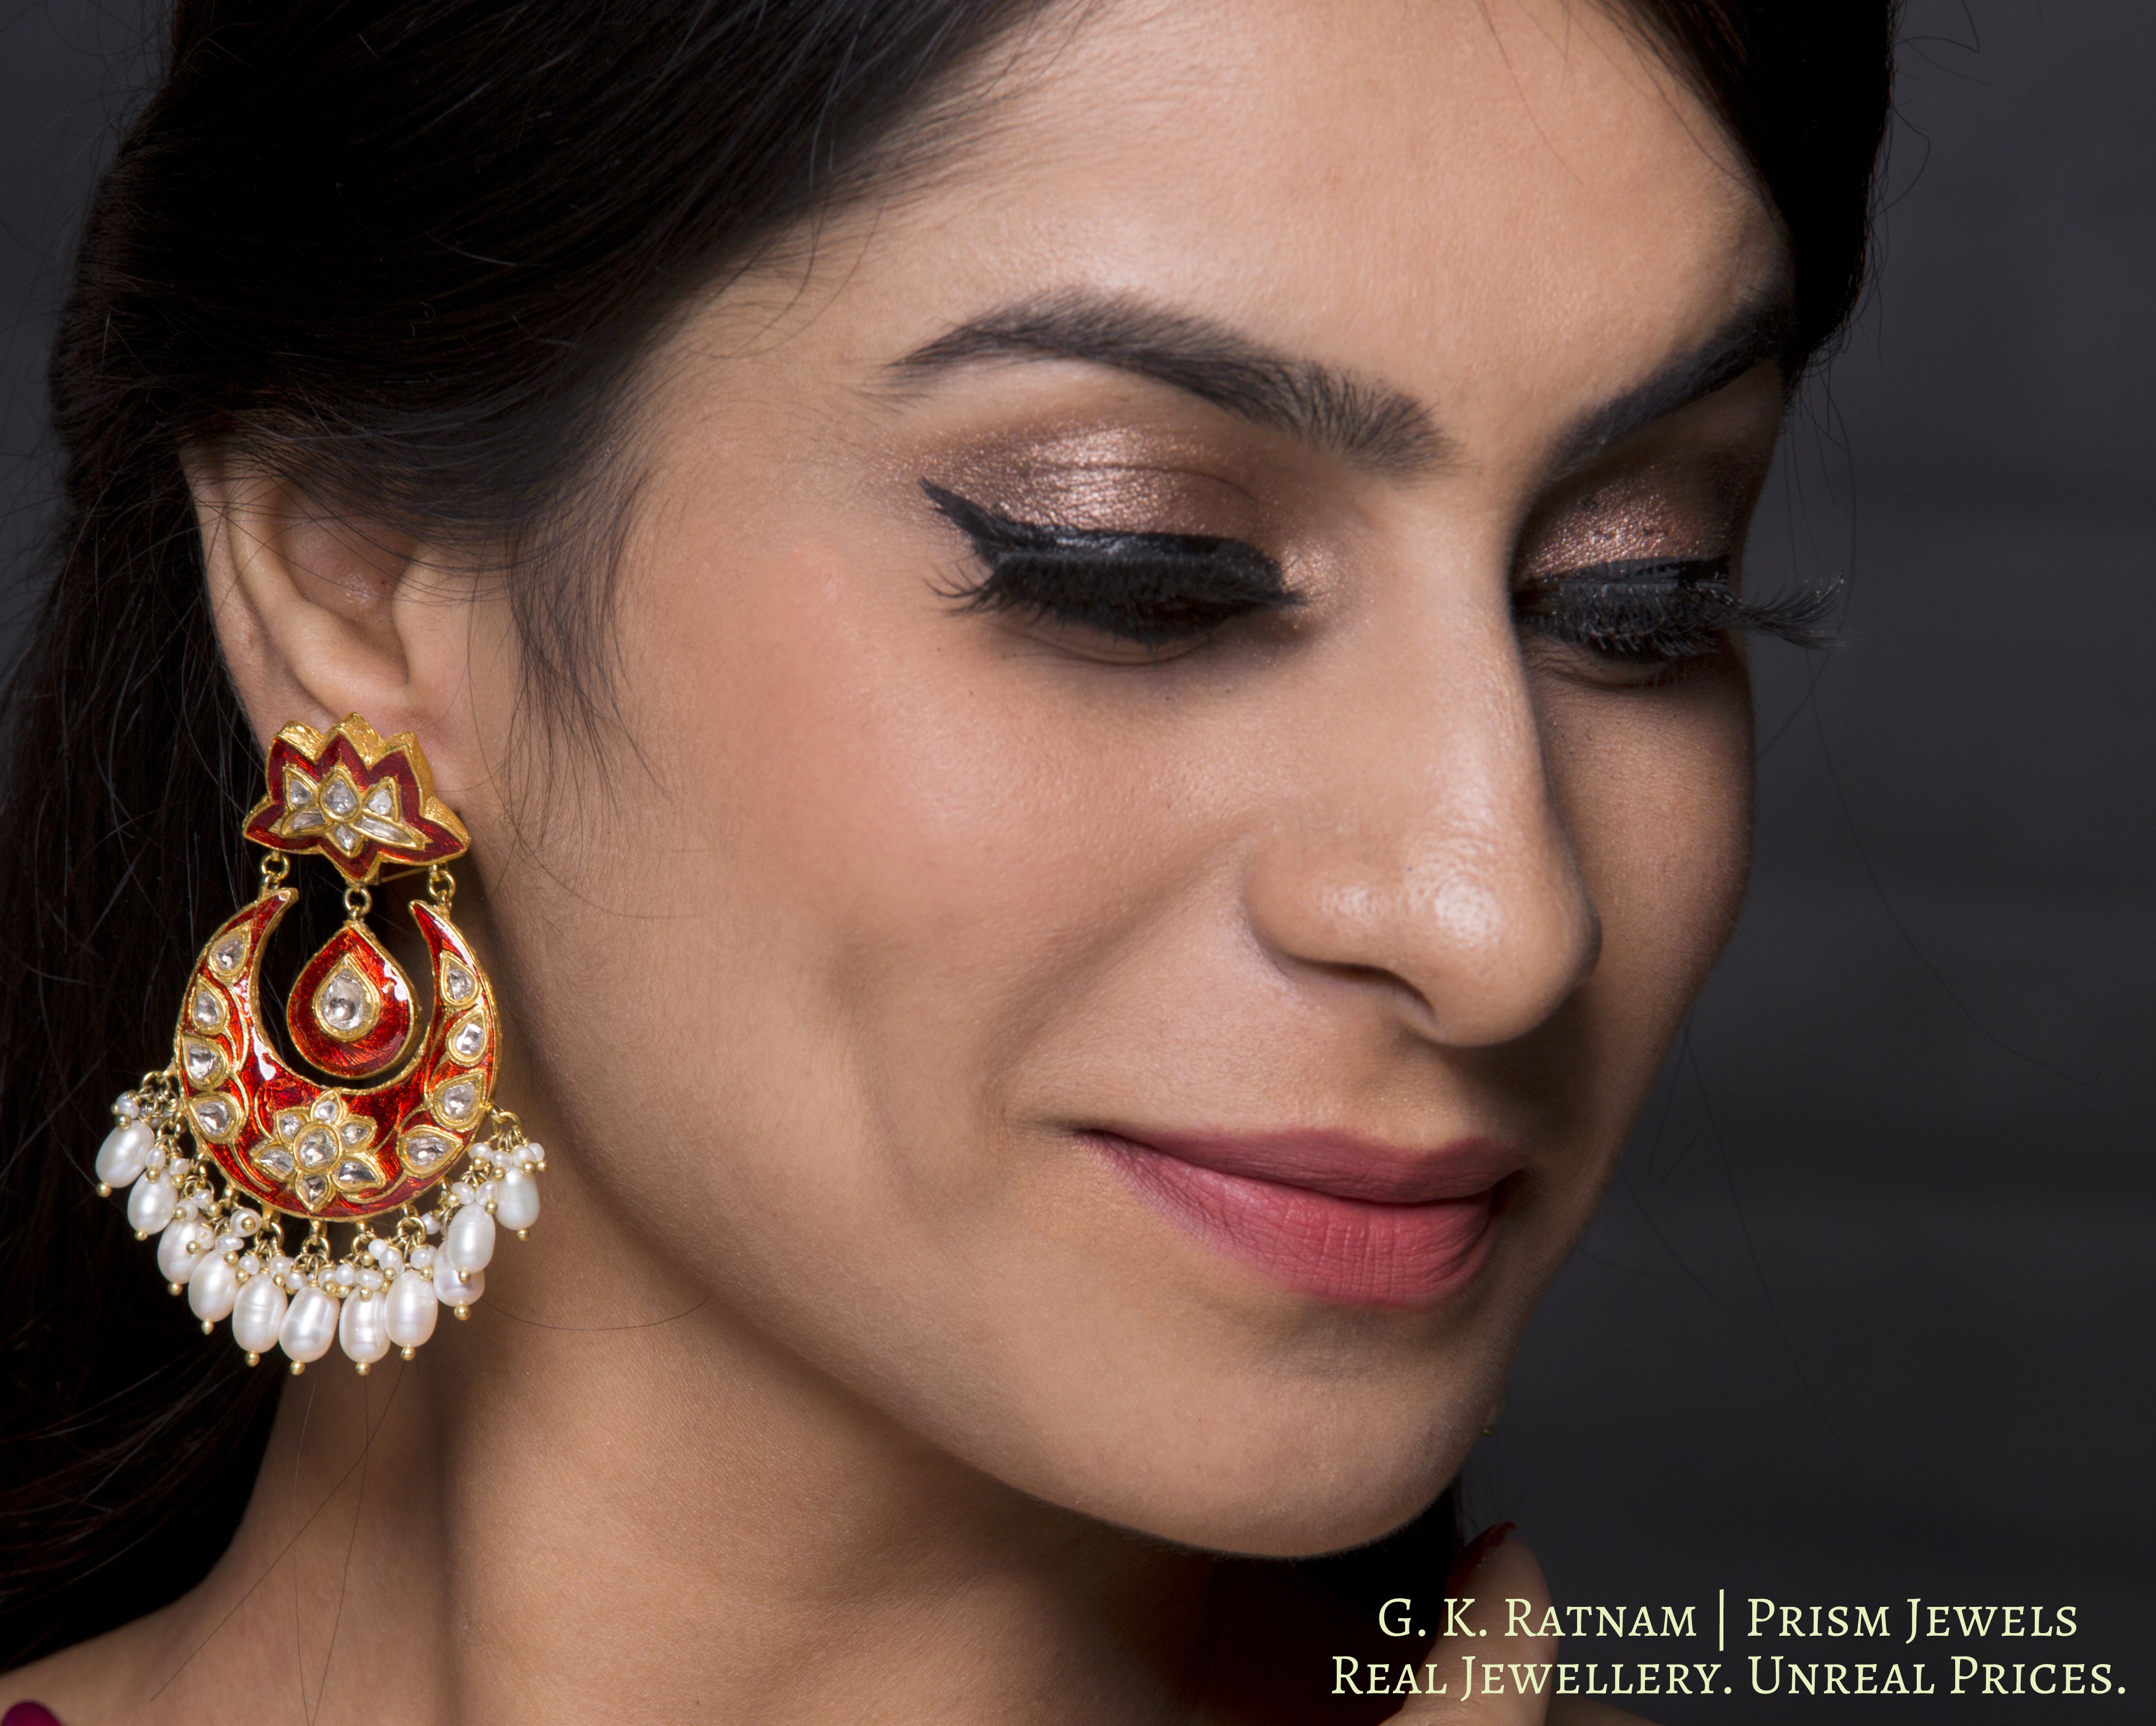 23k Gold and Diamond Polki Chand Bali Earring Pair with red meenakari - gold diamond polki kundan meena jadau jewellery